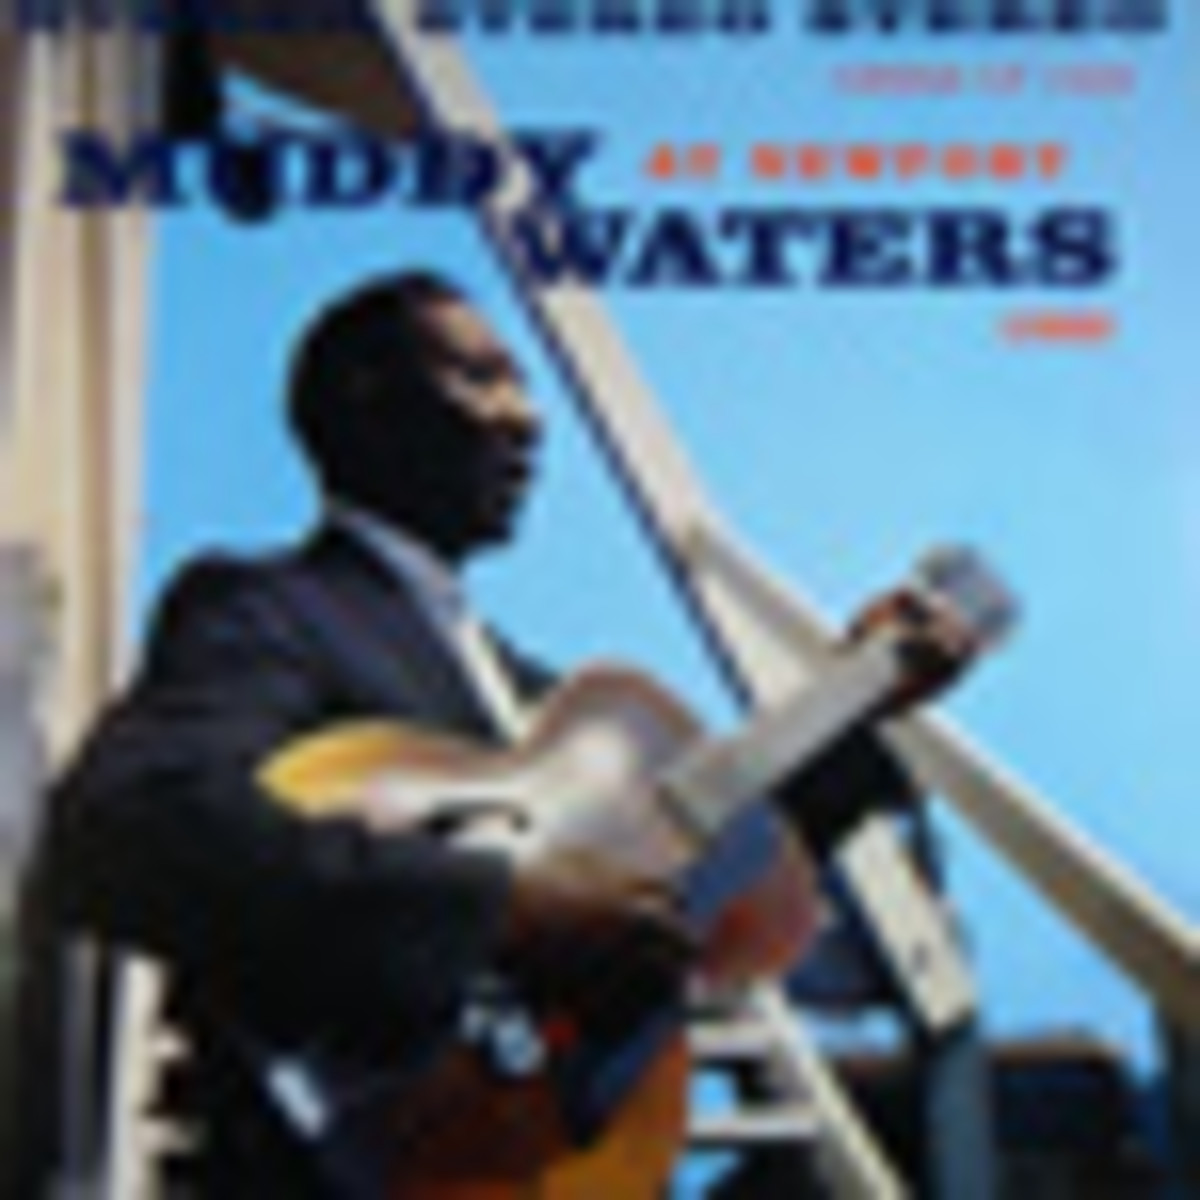 Muddy Waters At Newport 1960 LP